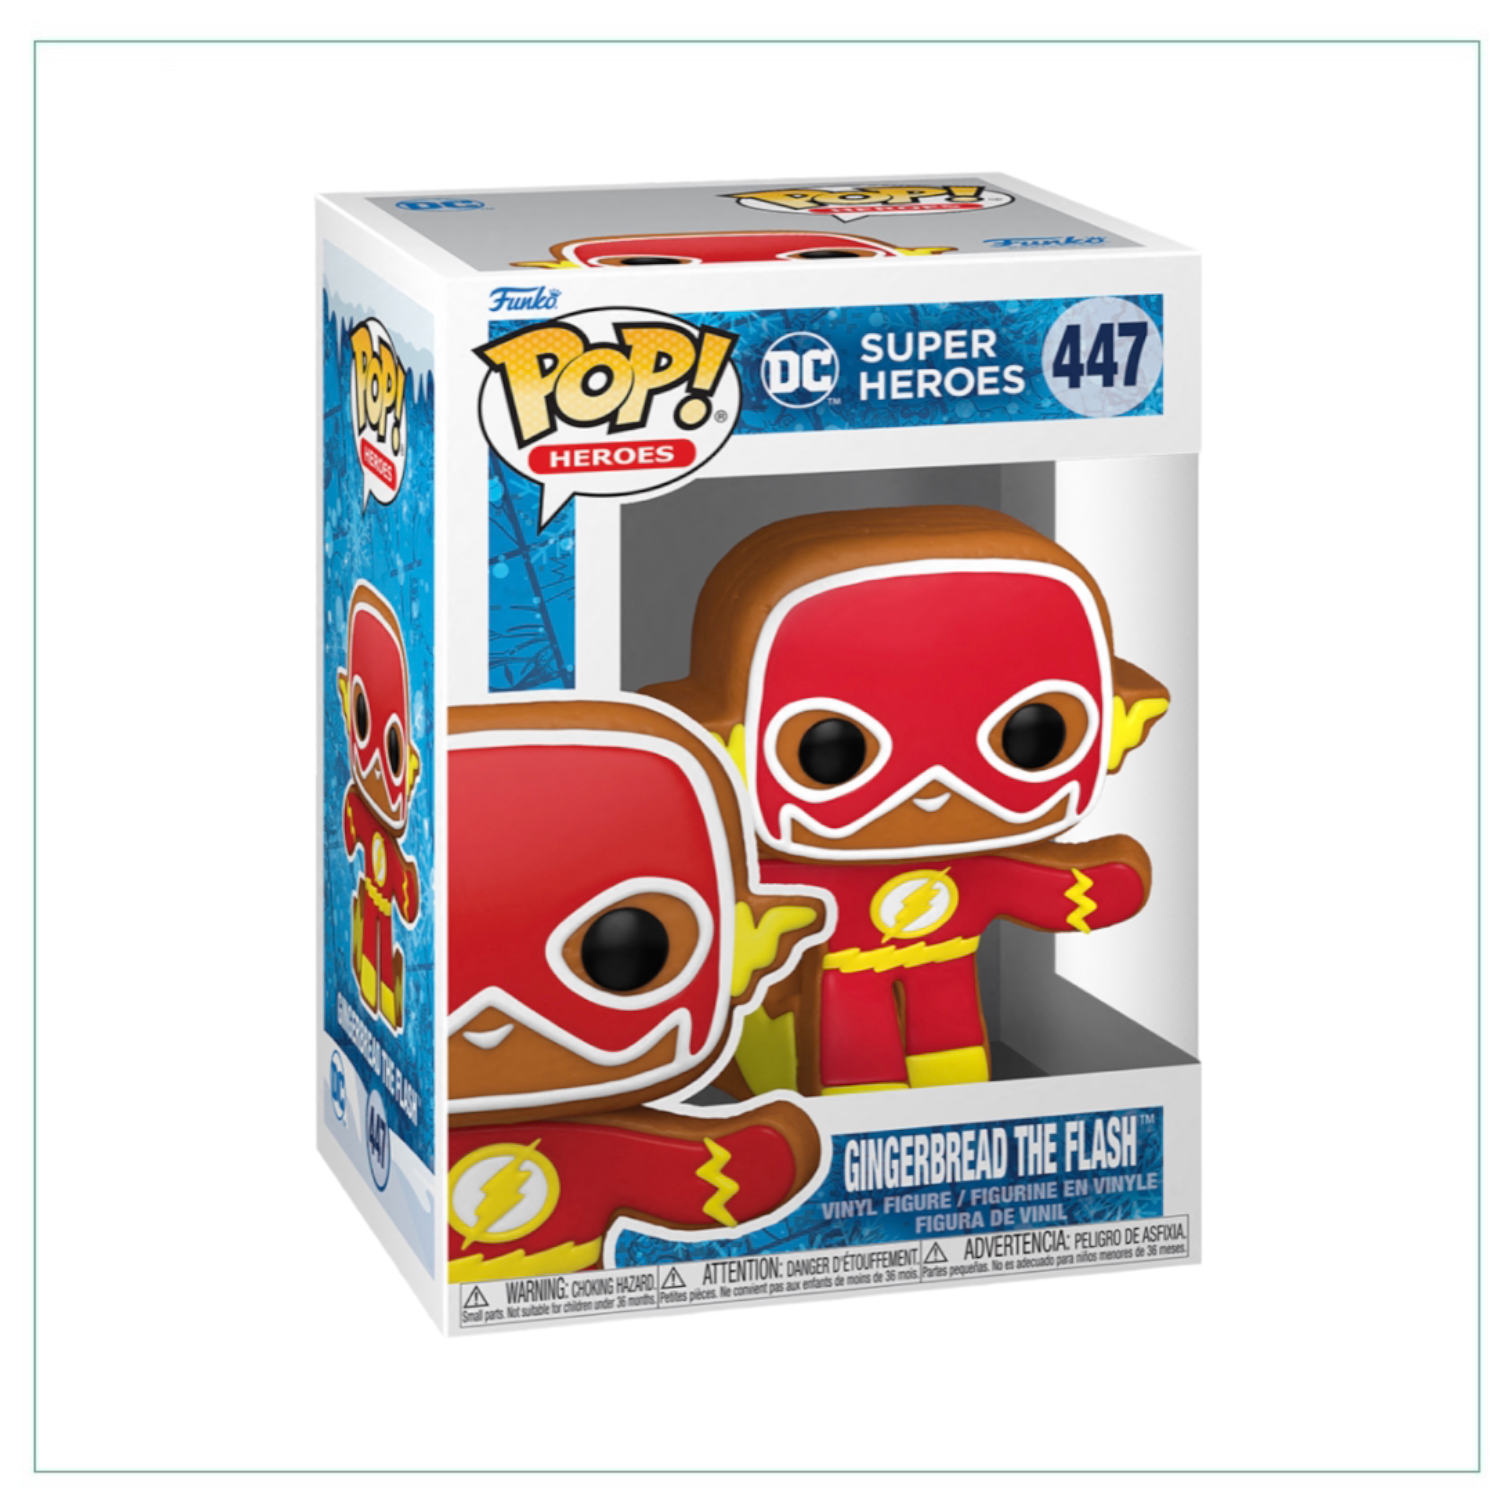 Gingerbread The Flash #447 Funko Pop! - DC